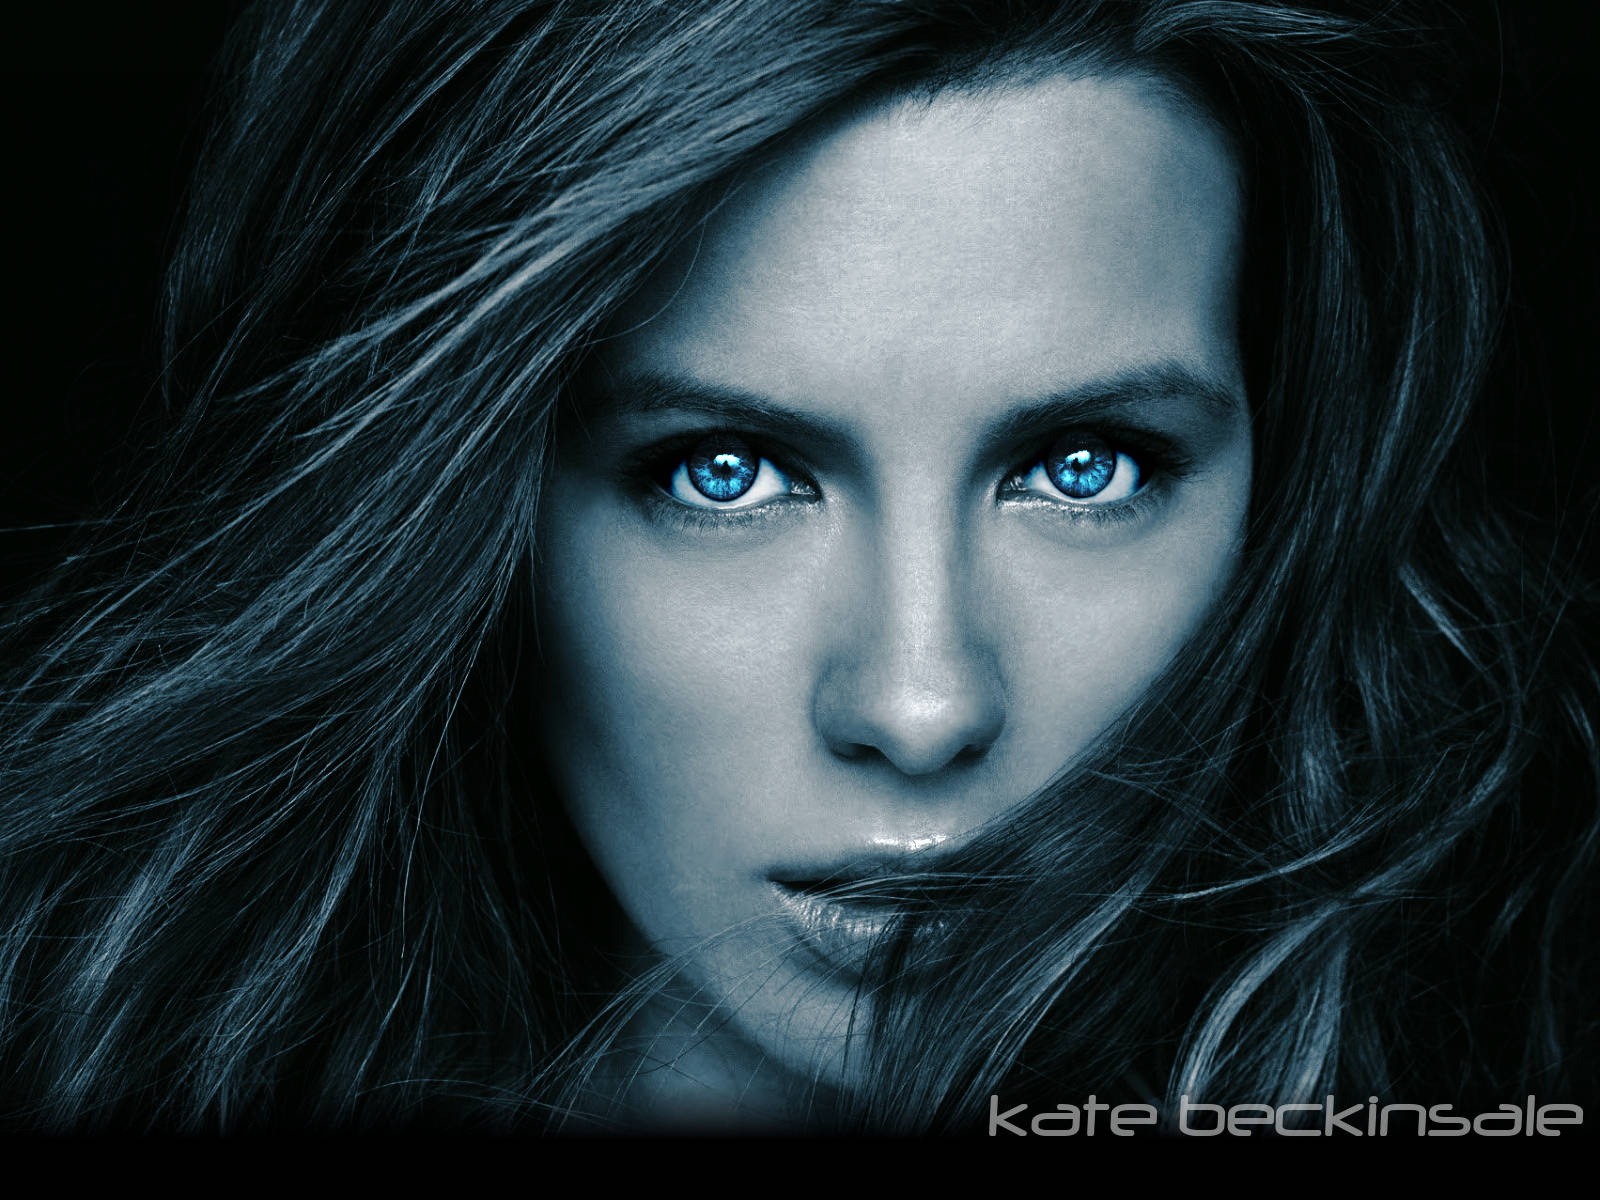 Kate Beckinsale Underworld Movie Actress Wallpaper